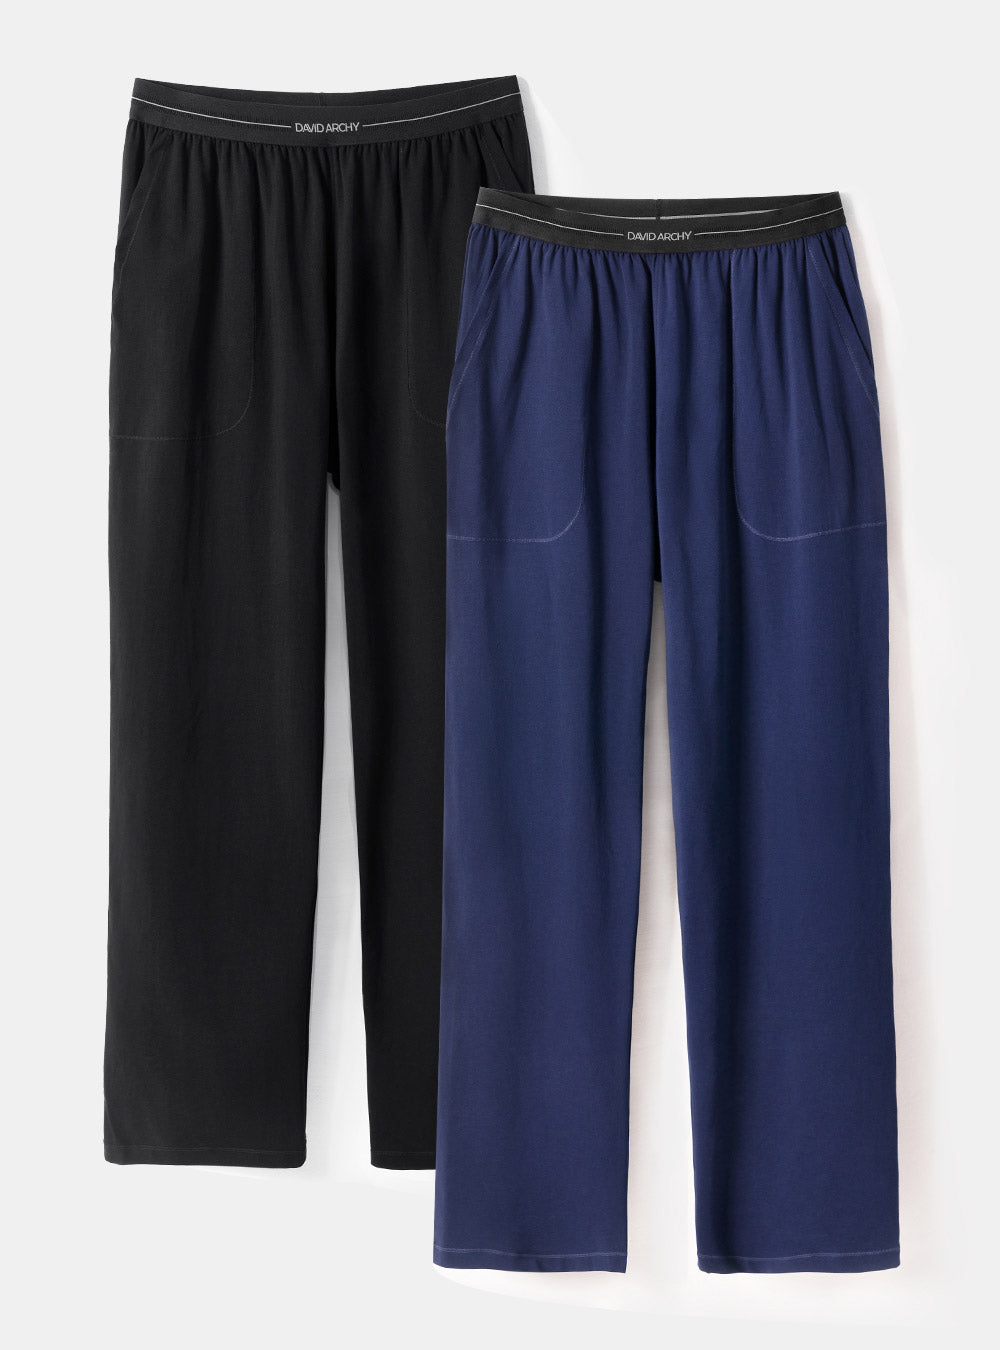 David Archy Cotton Men's Plain Moisture Wicking Sleepwear Pants